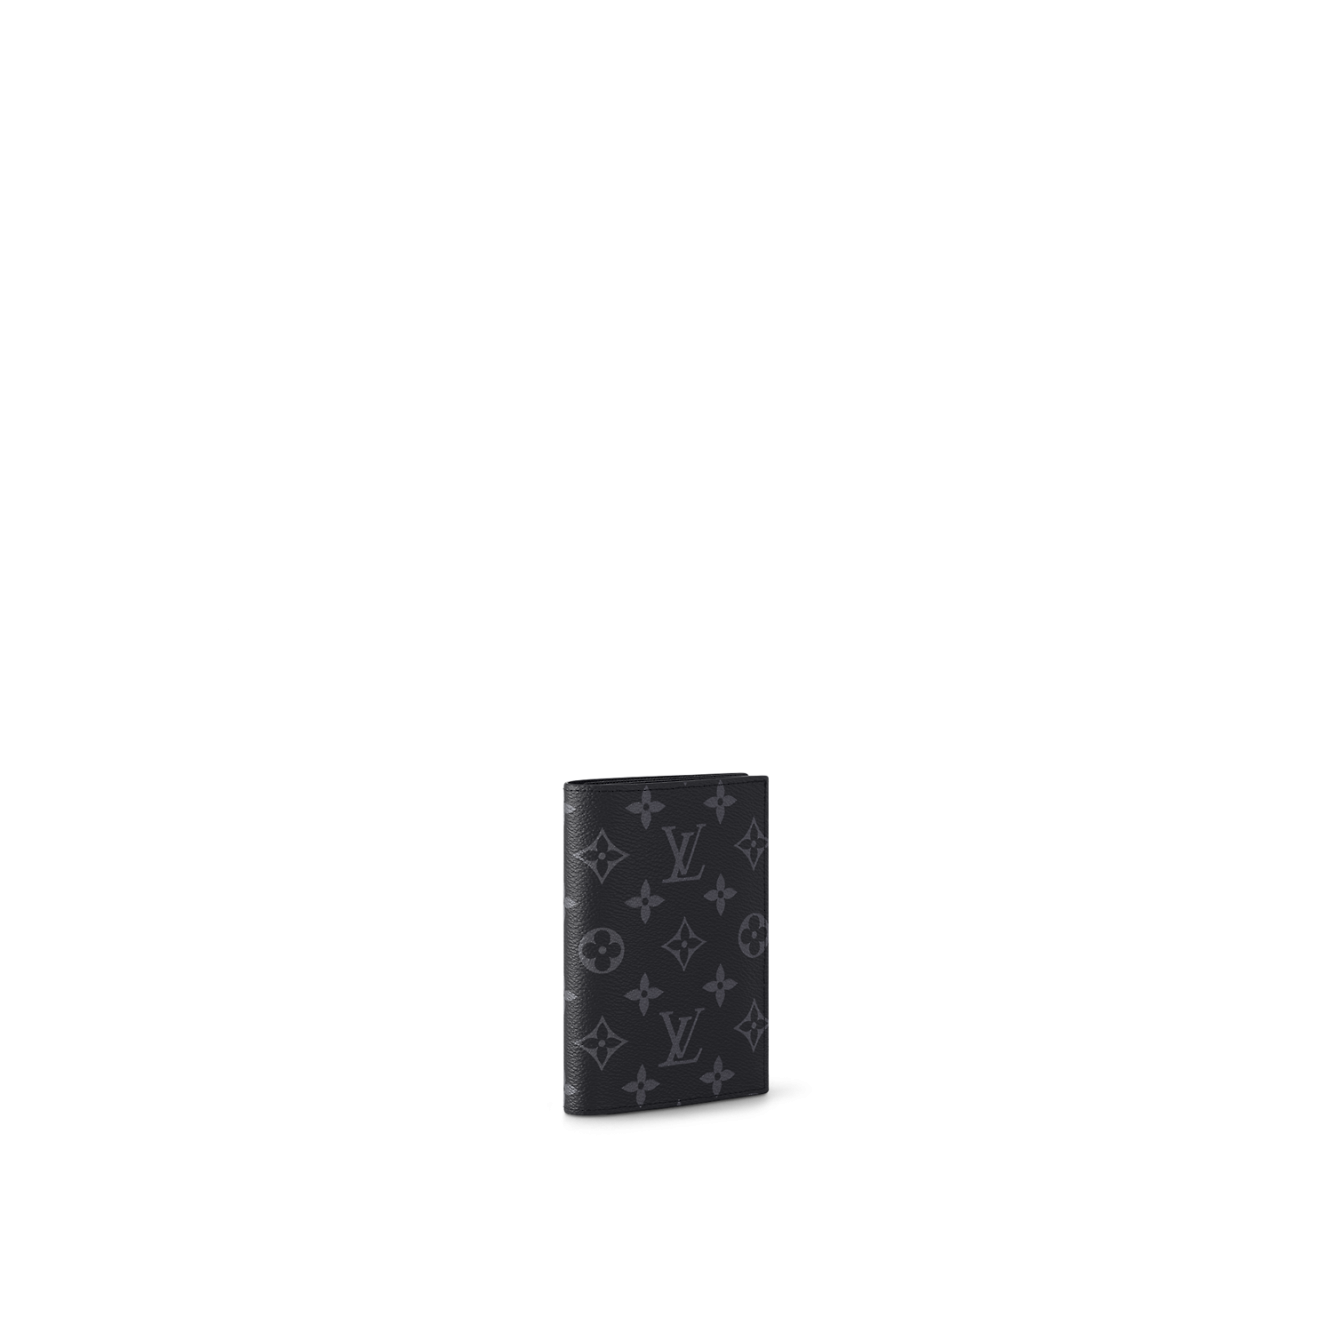 Louis Vuitton Passport Cover Monogram Eclipse Black/Grey